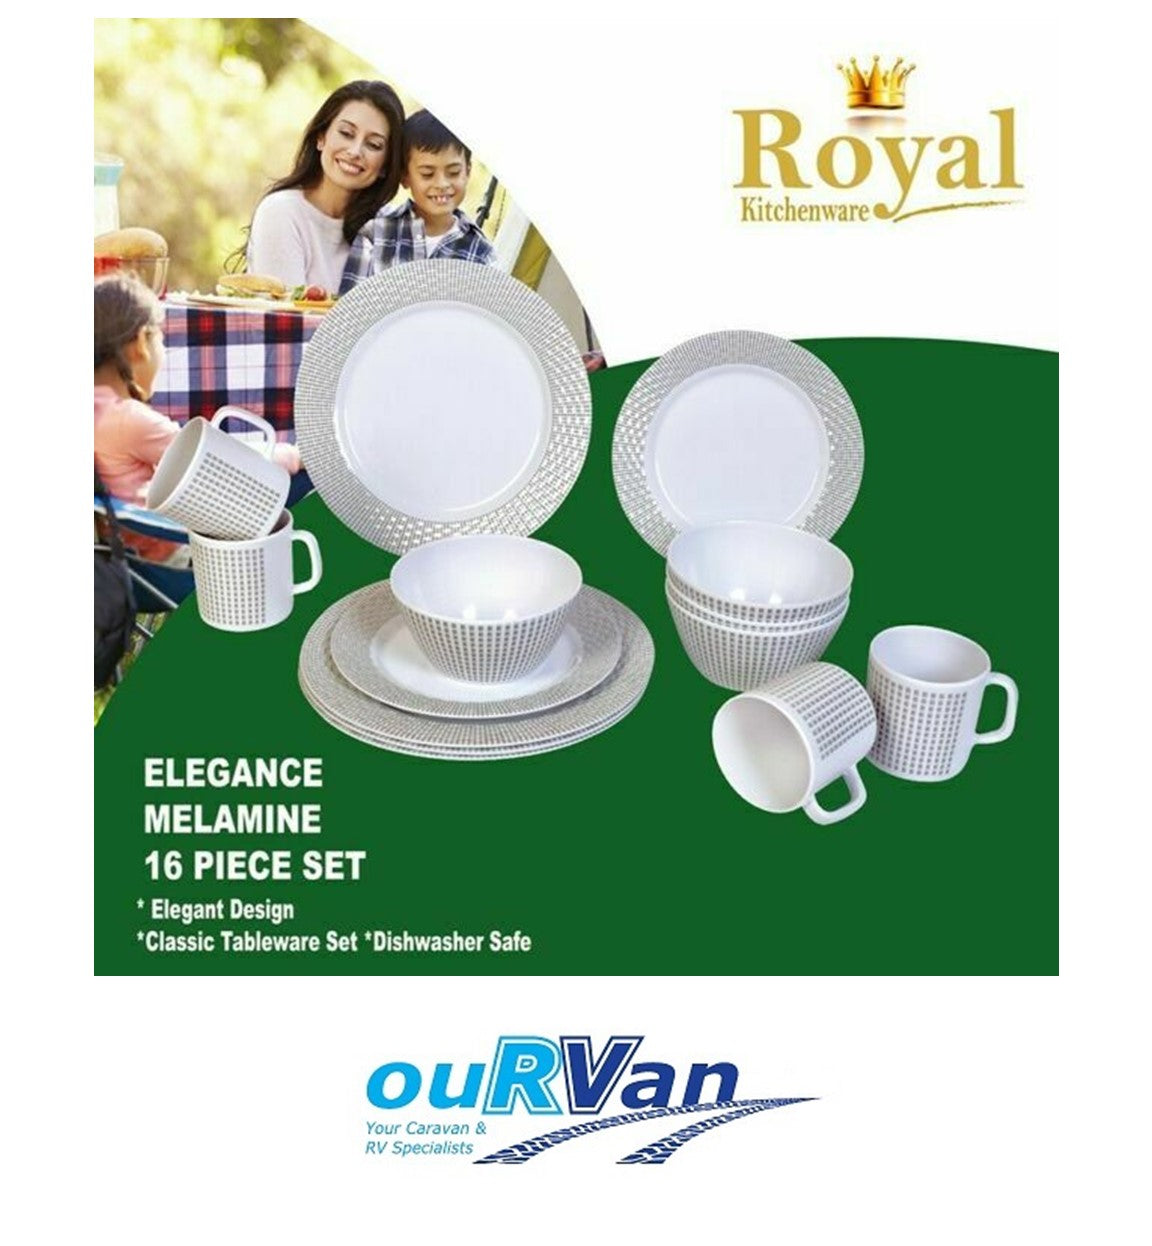 Royal Kitchenware 16 Piece Melamine Dinner Set - Elegance 0241 Caravan Camping